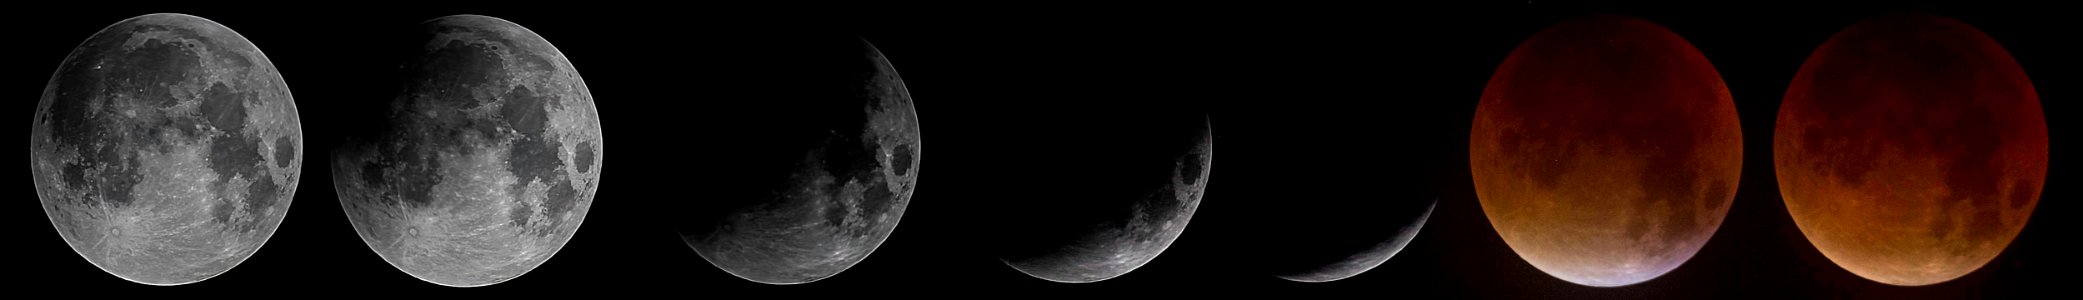 Lunar eclipse sequence photo